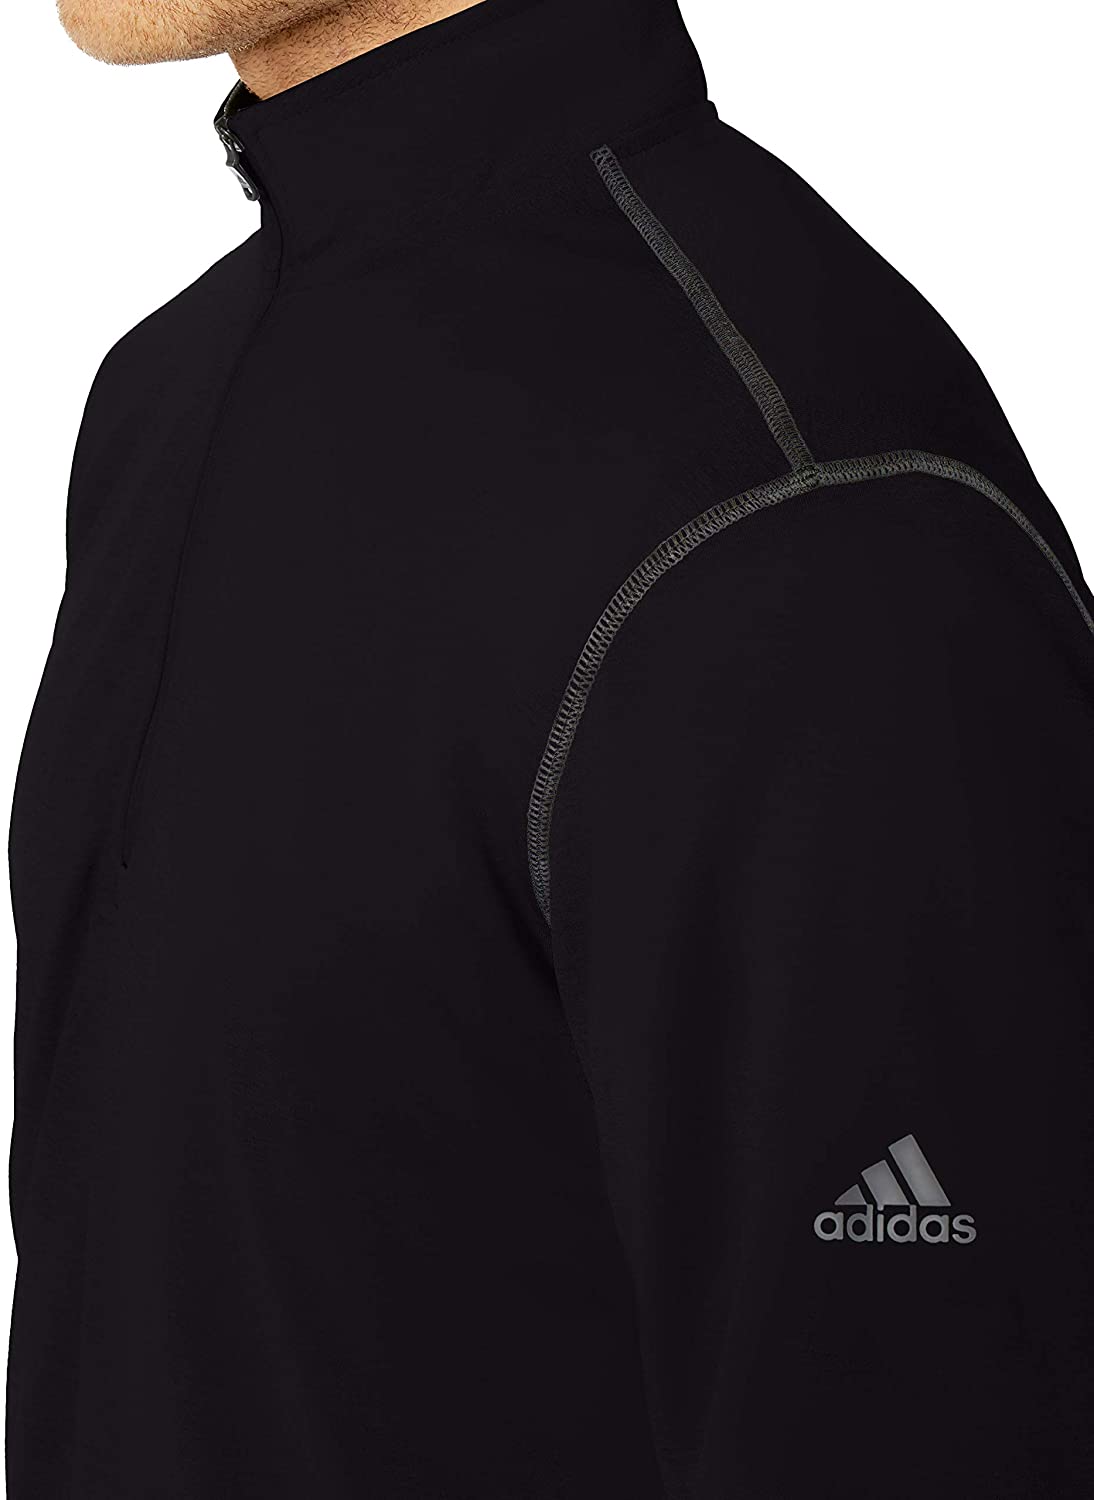 adidas Golf Mens Uv Protection 1/4 Zip Jacket Coat - image 3 of 3